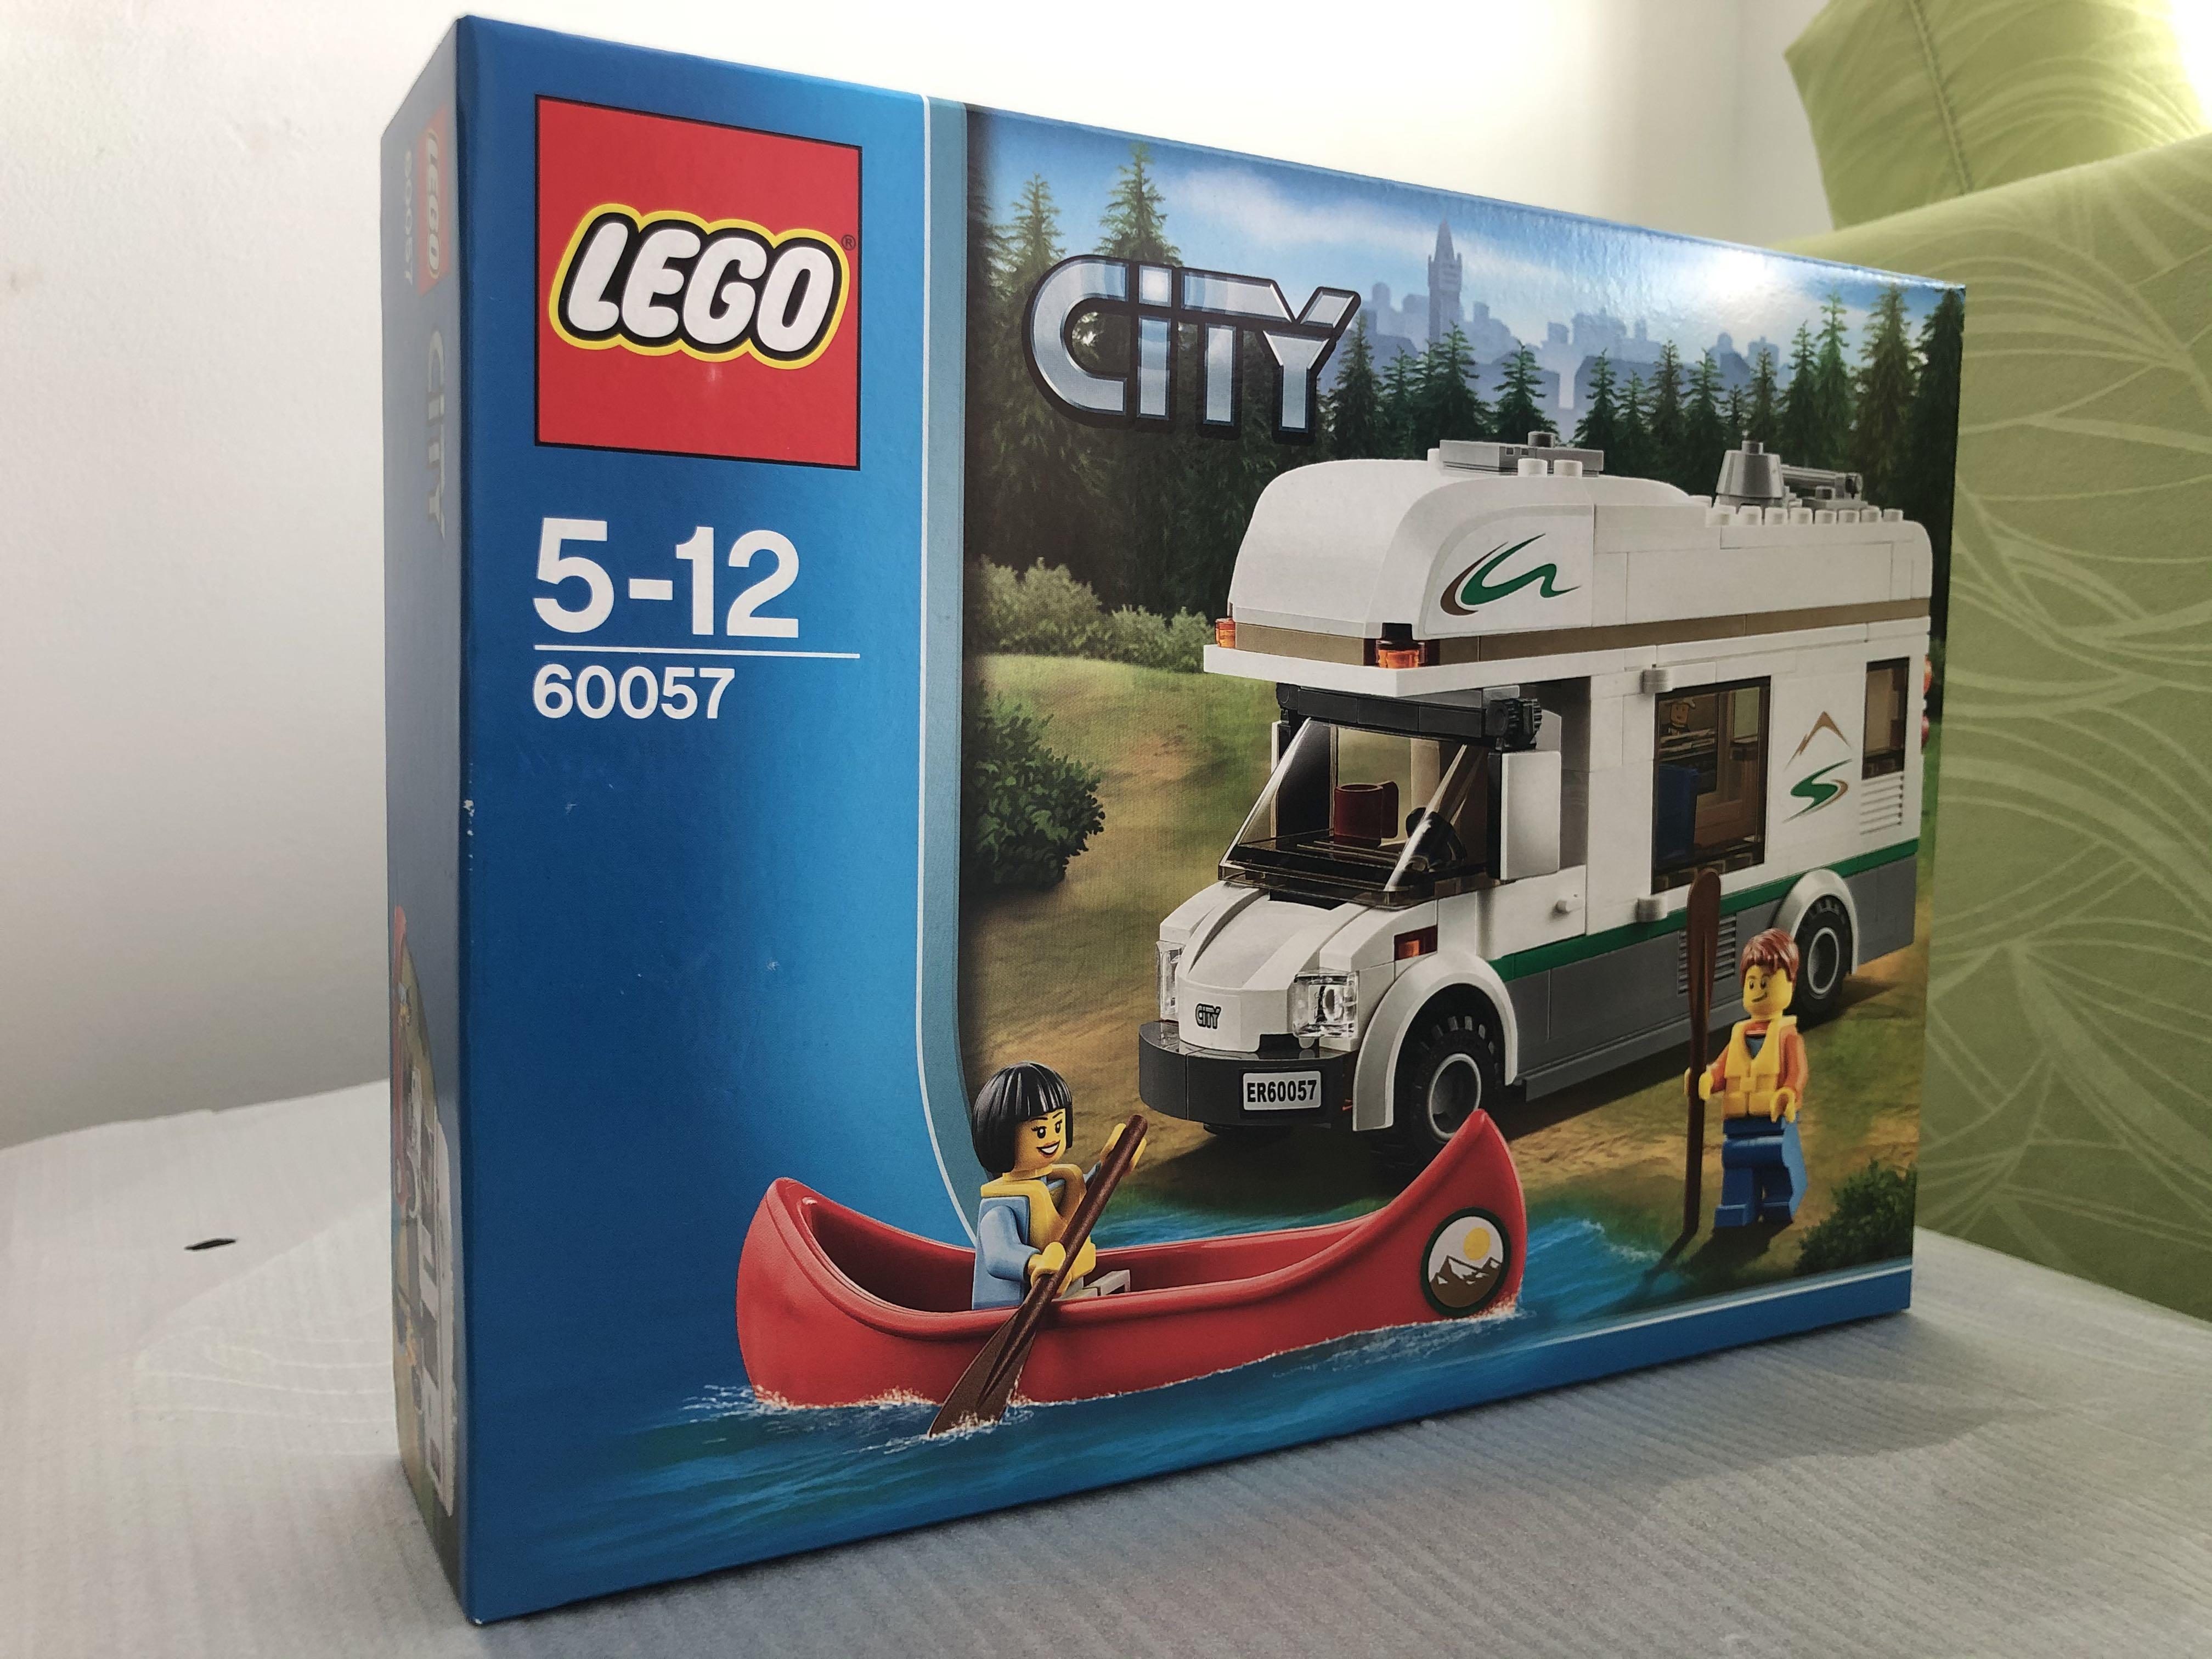 lego city great vehicles 60057 camper van